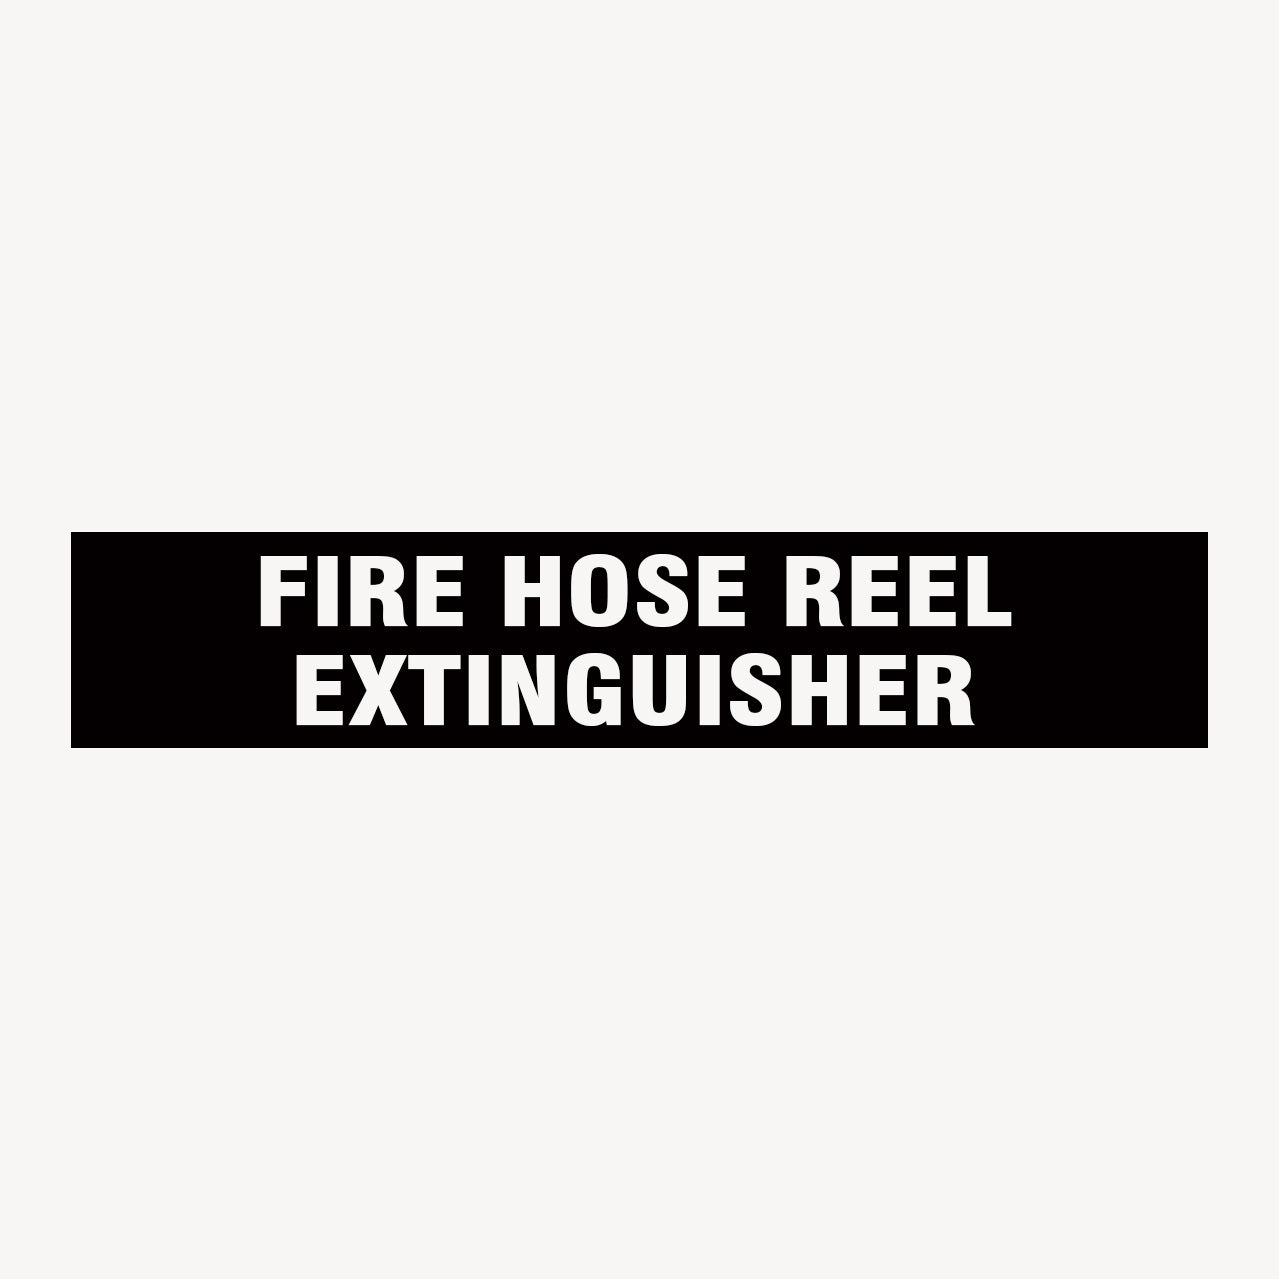 FIRE HOSE REEL/EXTINGUISHER SIGN - shop online fire safety signs